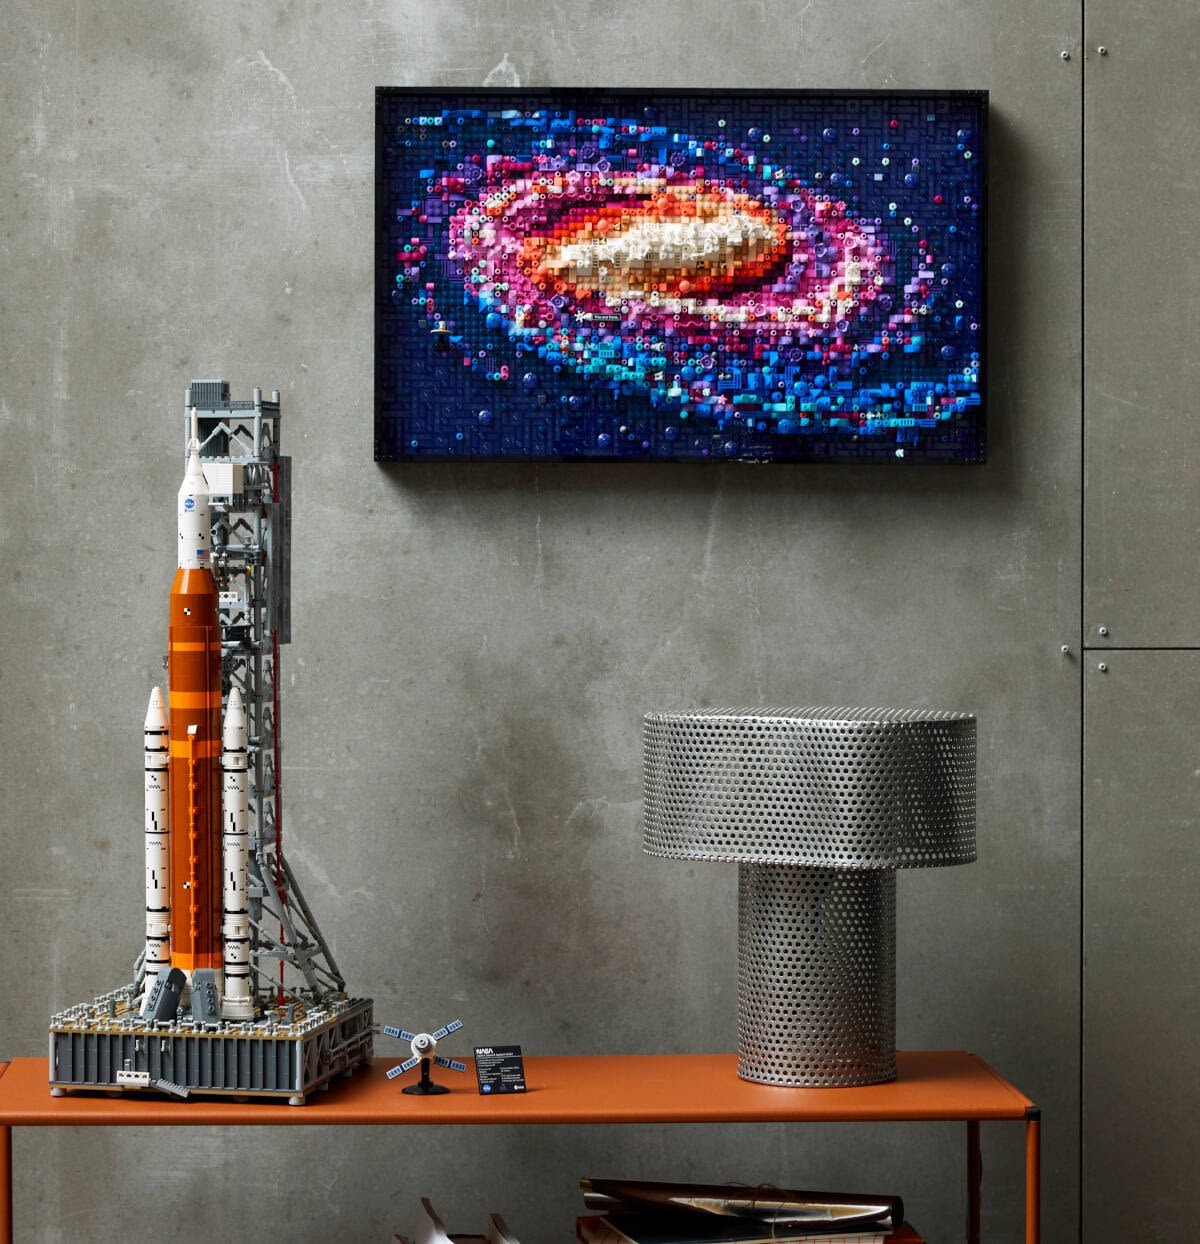 We build Lego's official Artemis SLS and Milky Way Galaxy